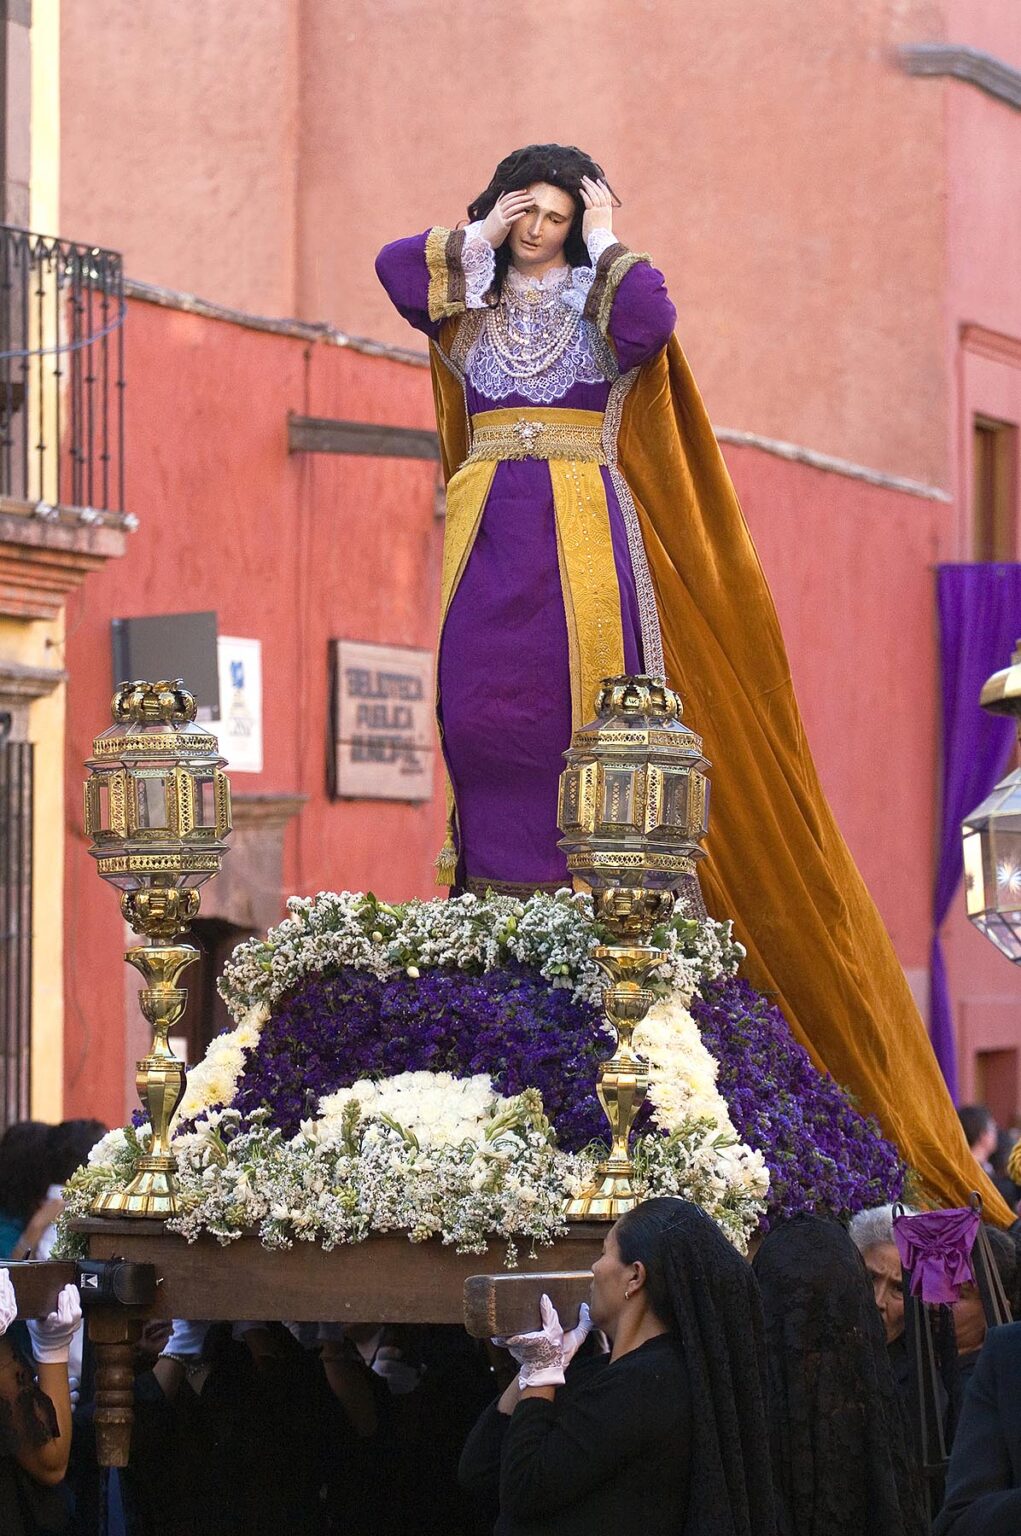 Statue of MARY MAGDALENE in the Easter Procession starting at TEMPLO DEL ORATORIO DE SAN FELIPE NERI - SAN MIGUEL DE ALLENDE, MEXICO